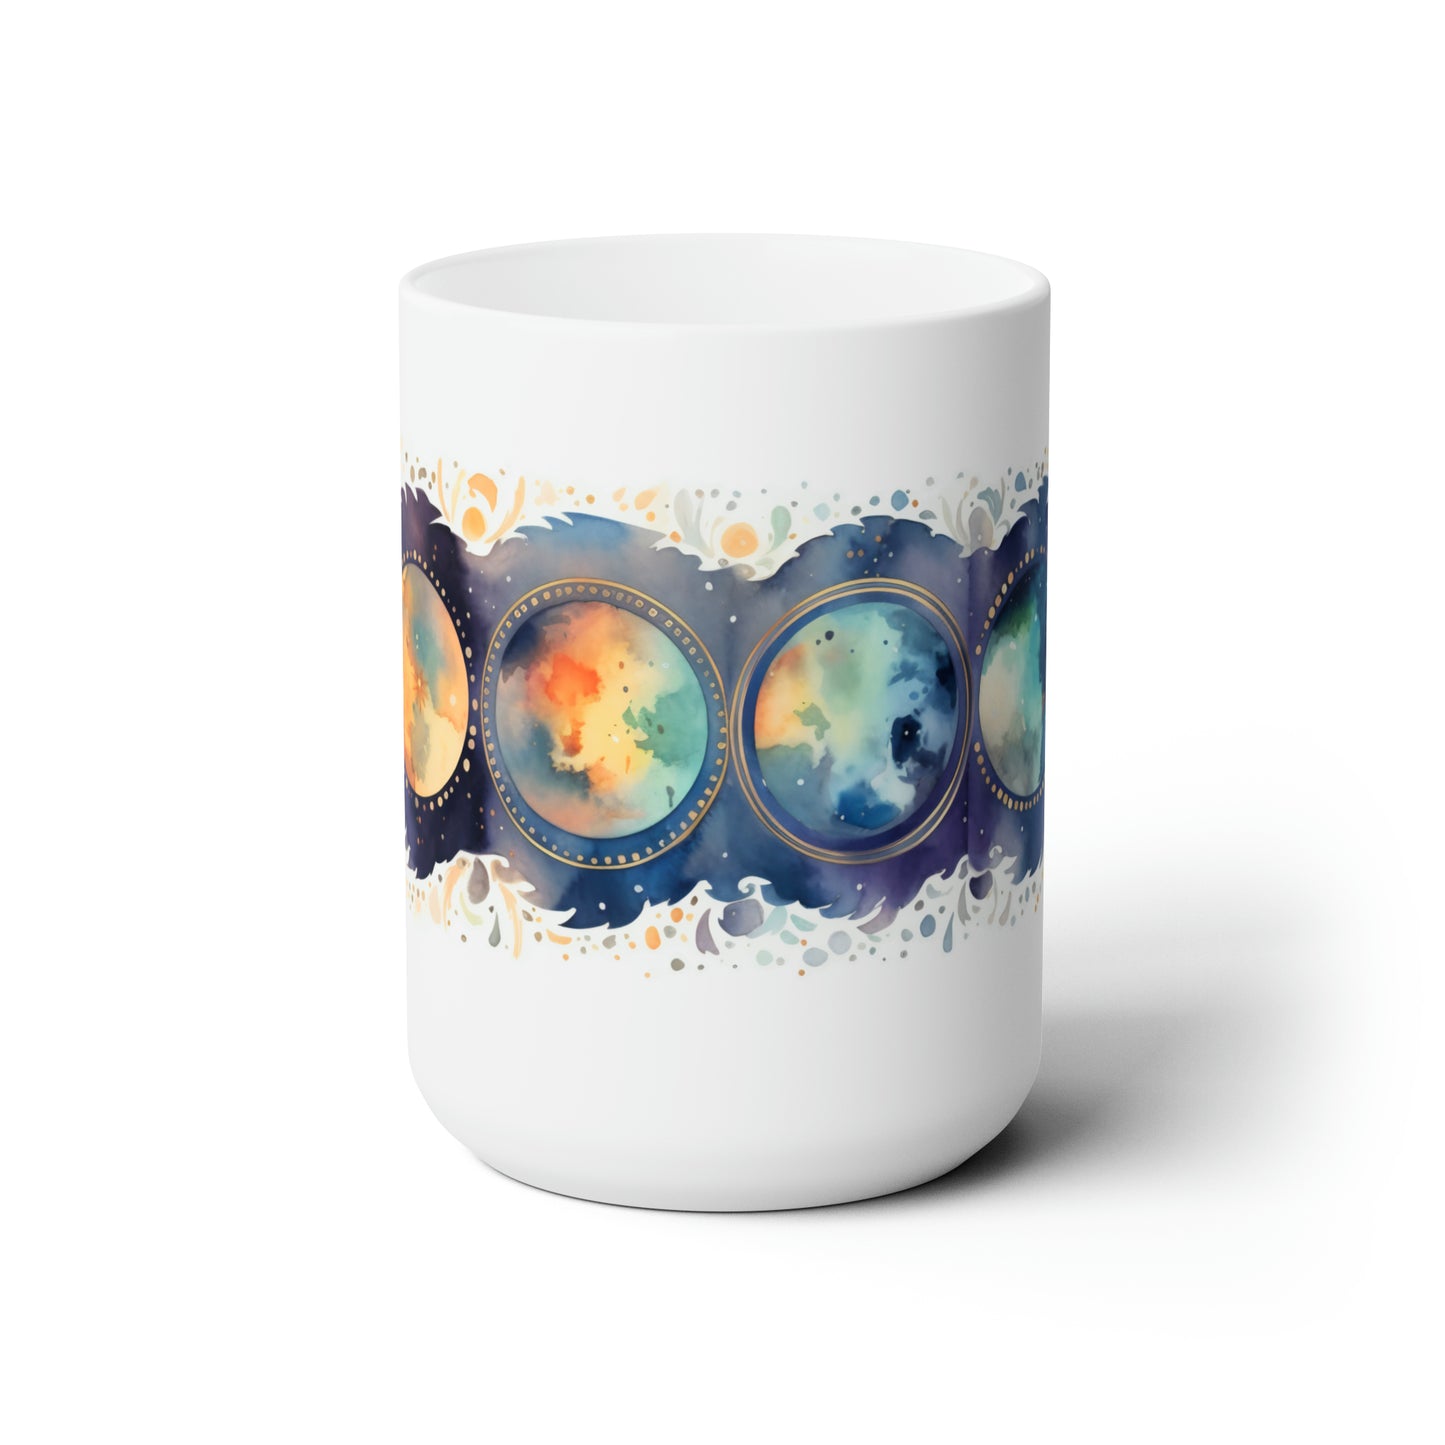 Watercolor Moons Mug, Celestial Moon Motifs Ceramic Mug 15oz, Moon Phases Coffee Cup, Moon Tea Mug